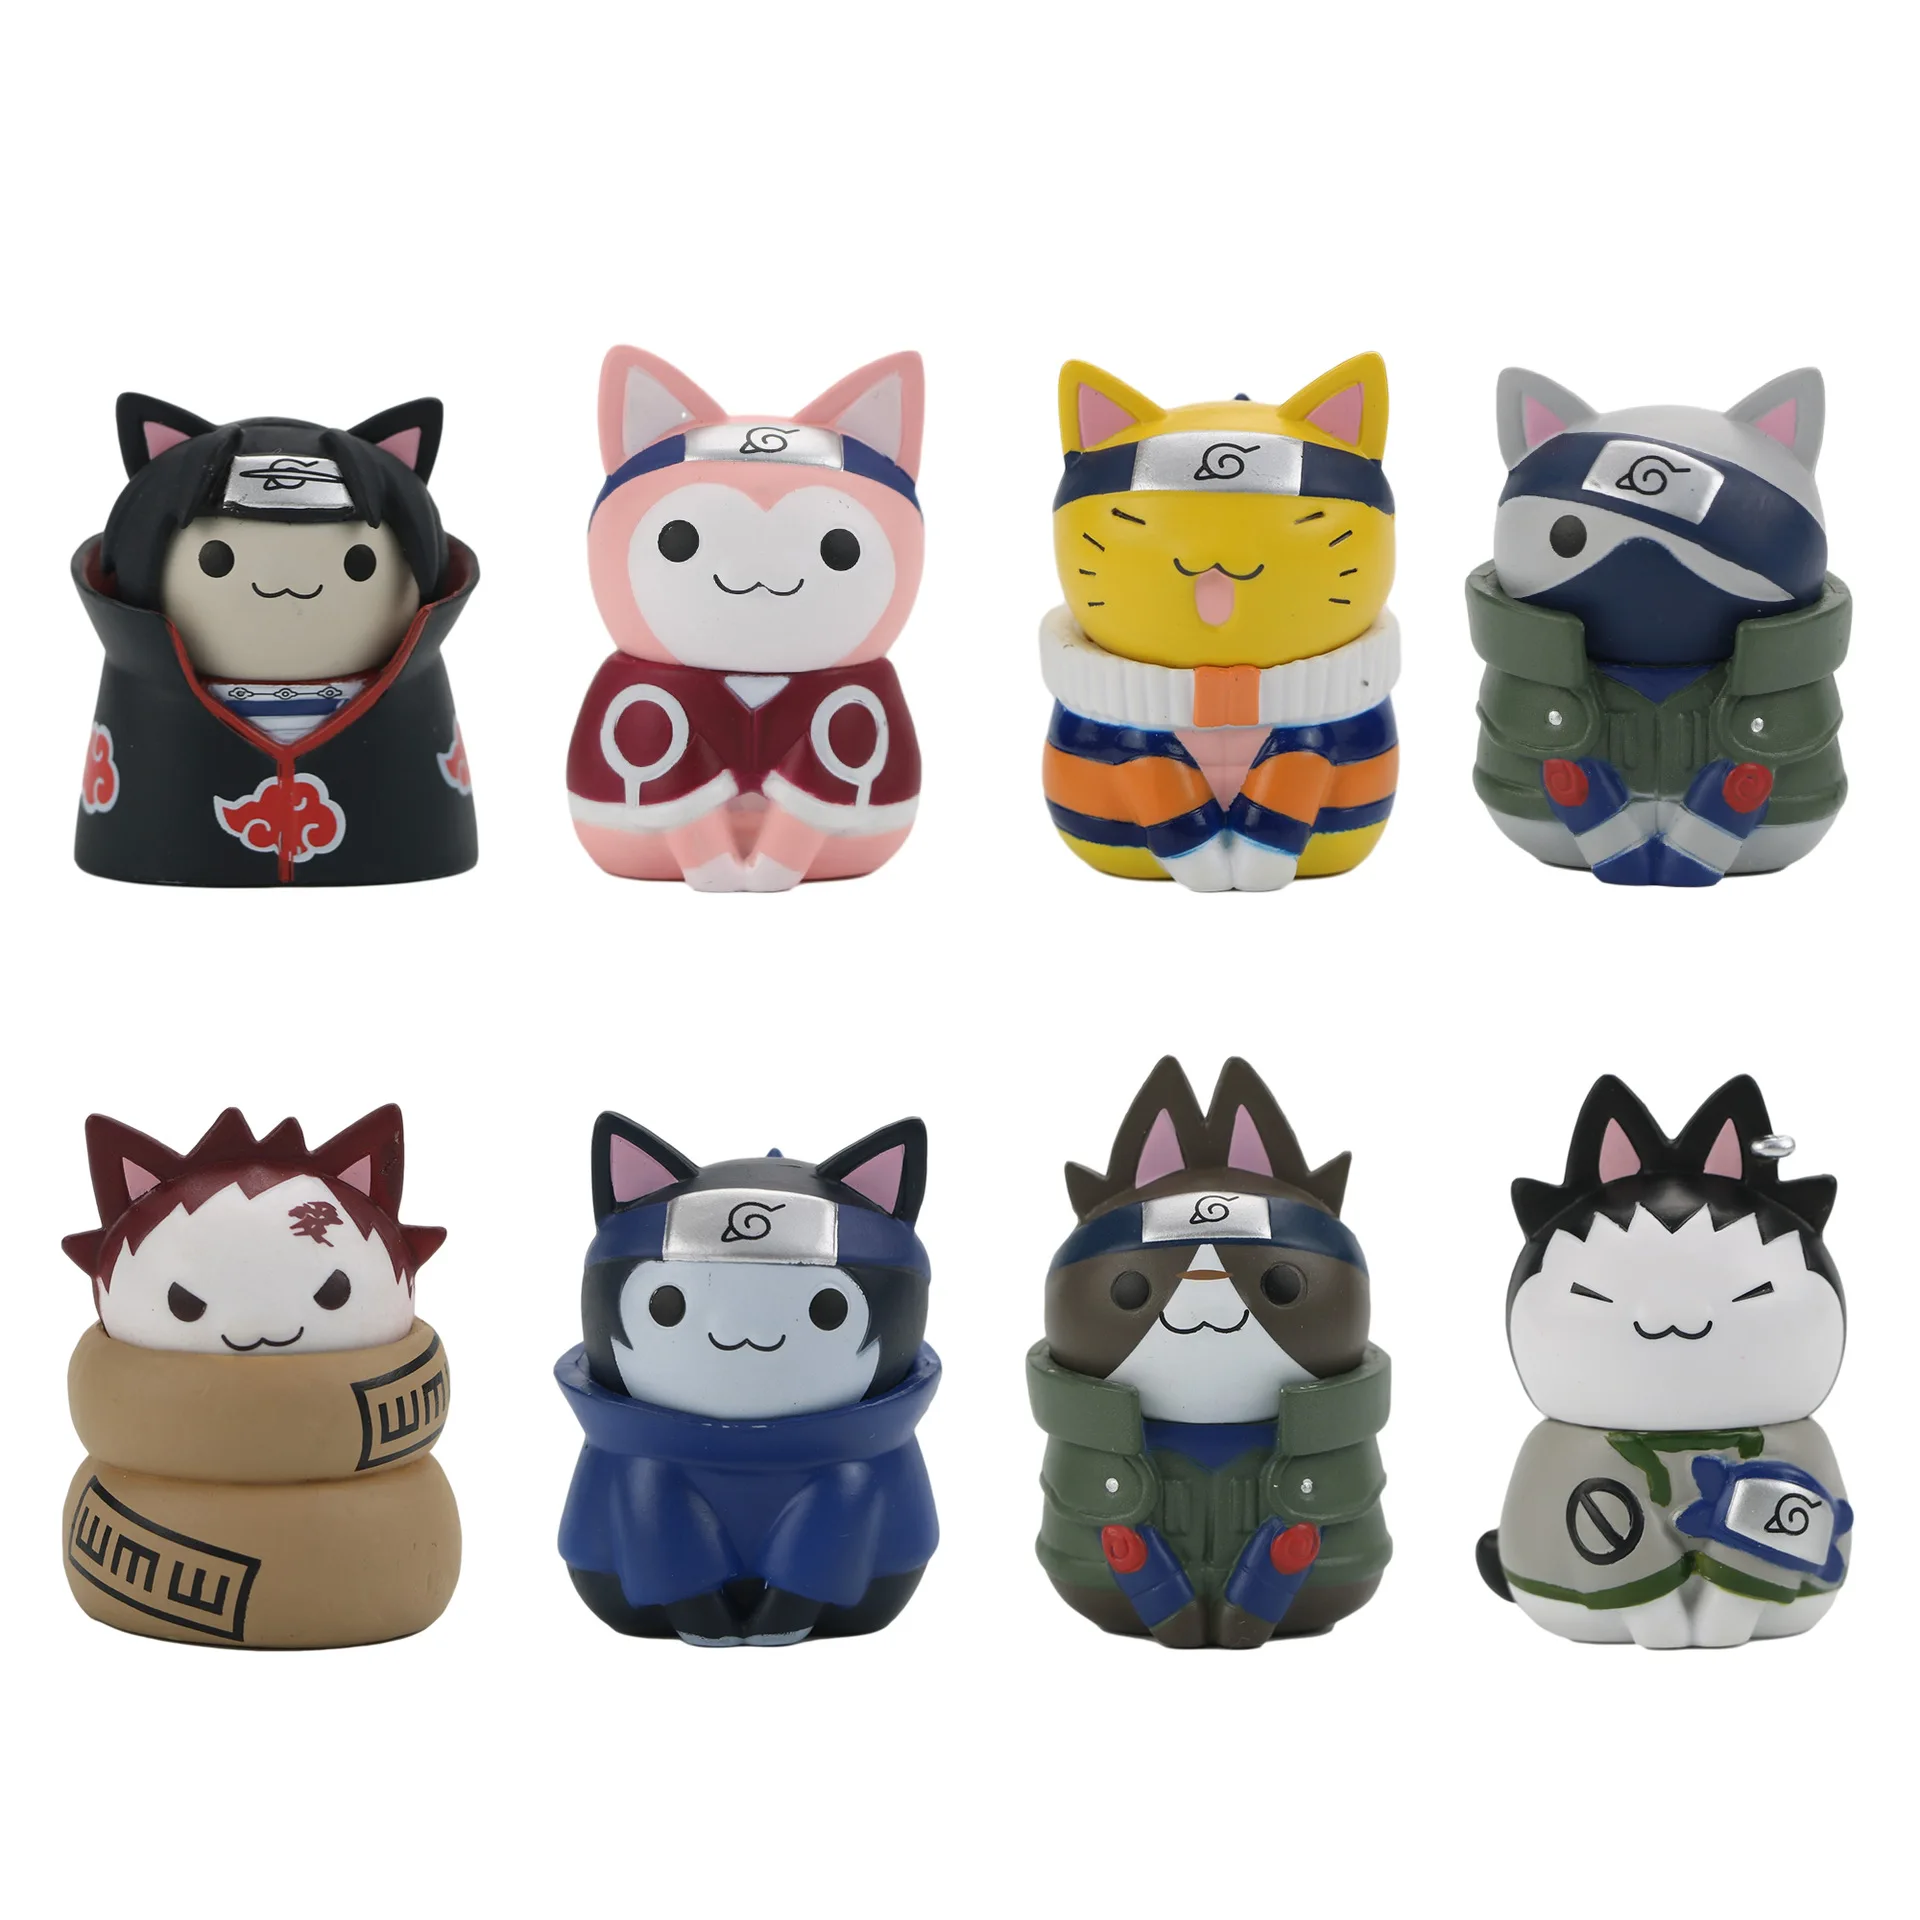 

8PCS/Set Cat Figures Toys Room Decoration Kakashi Gaara Hinata Sasuke Itachi Q Version 5cm Dolls Children's toys Christmas gifts